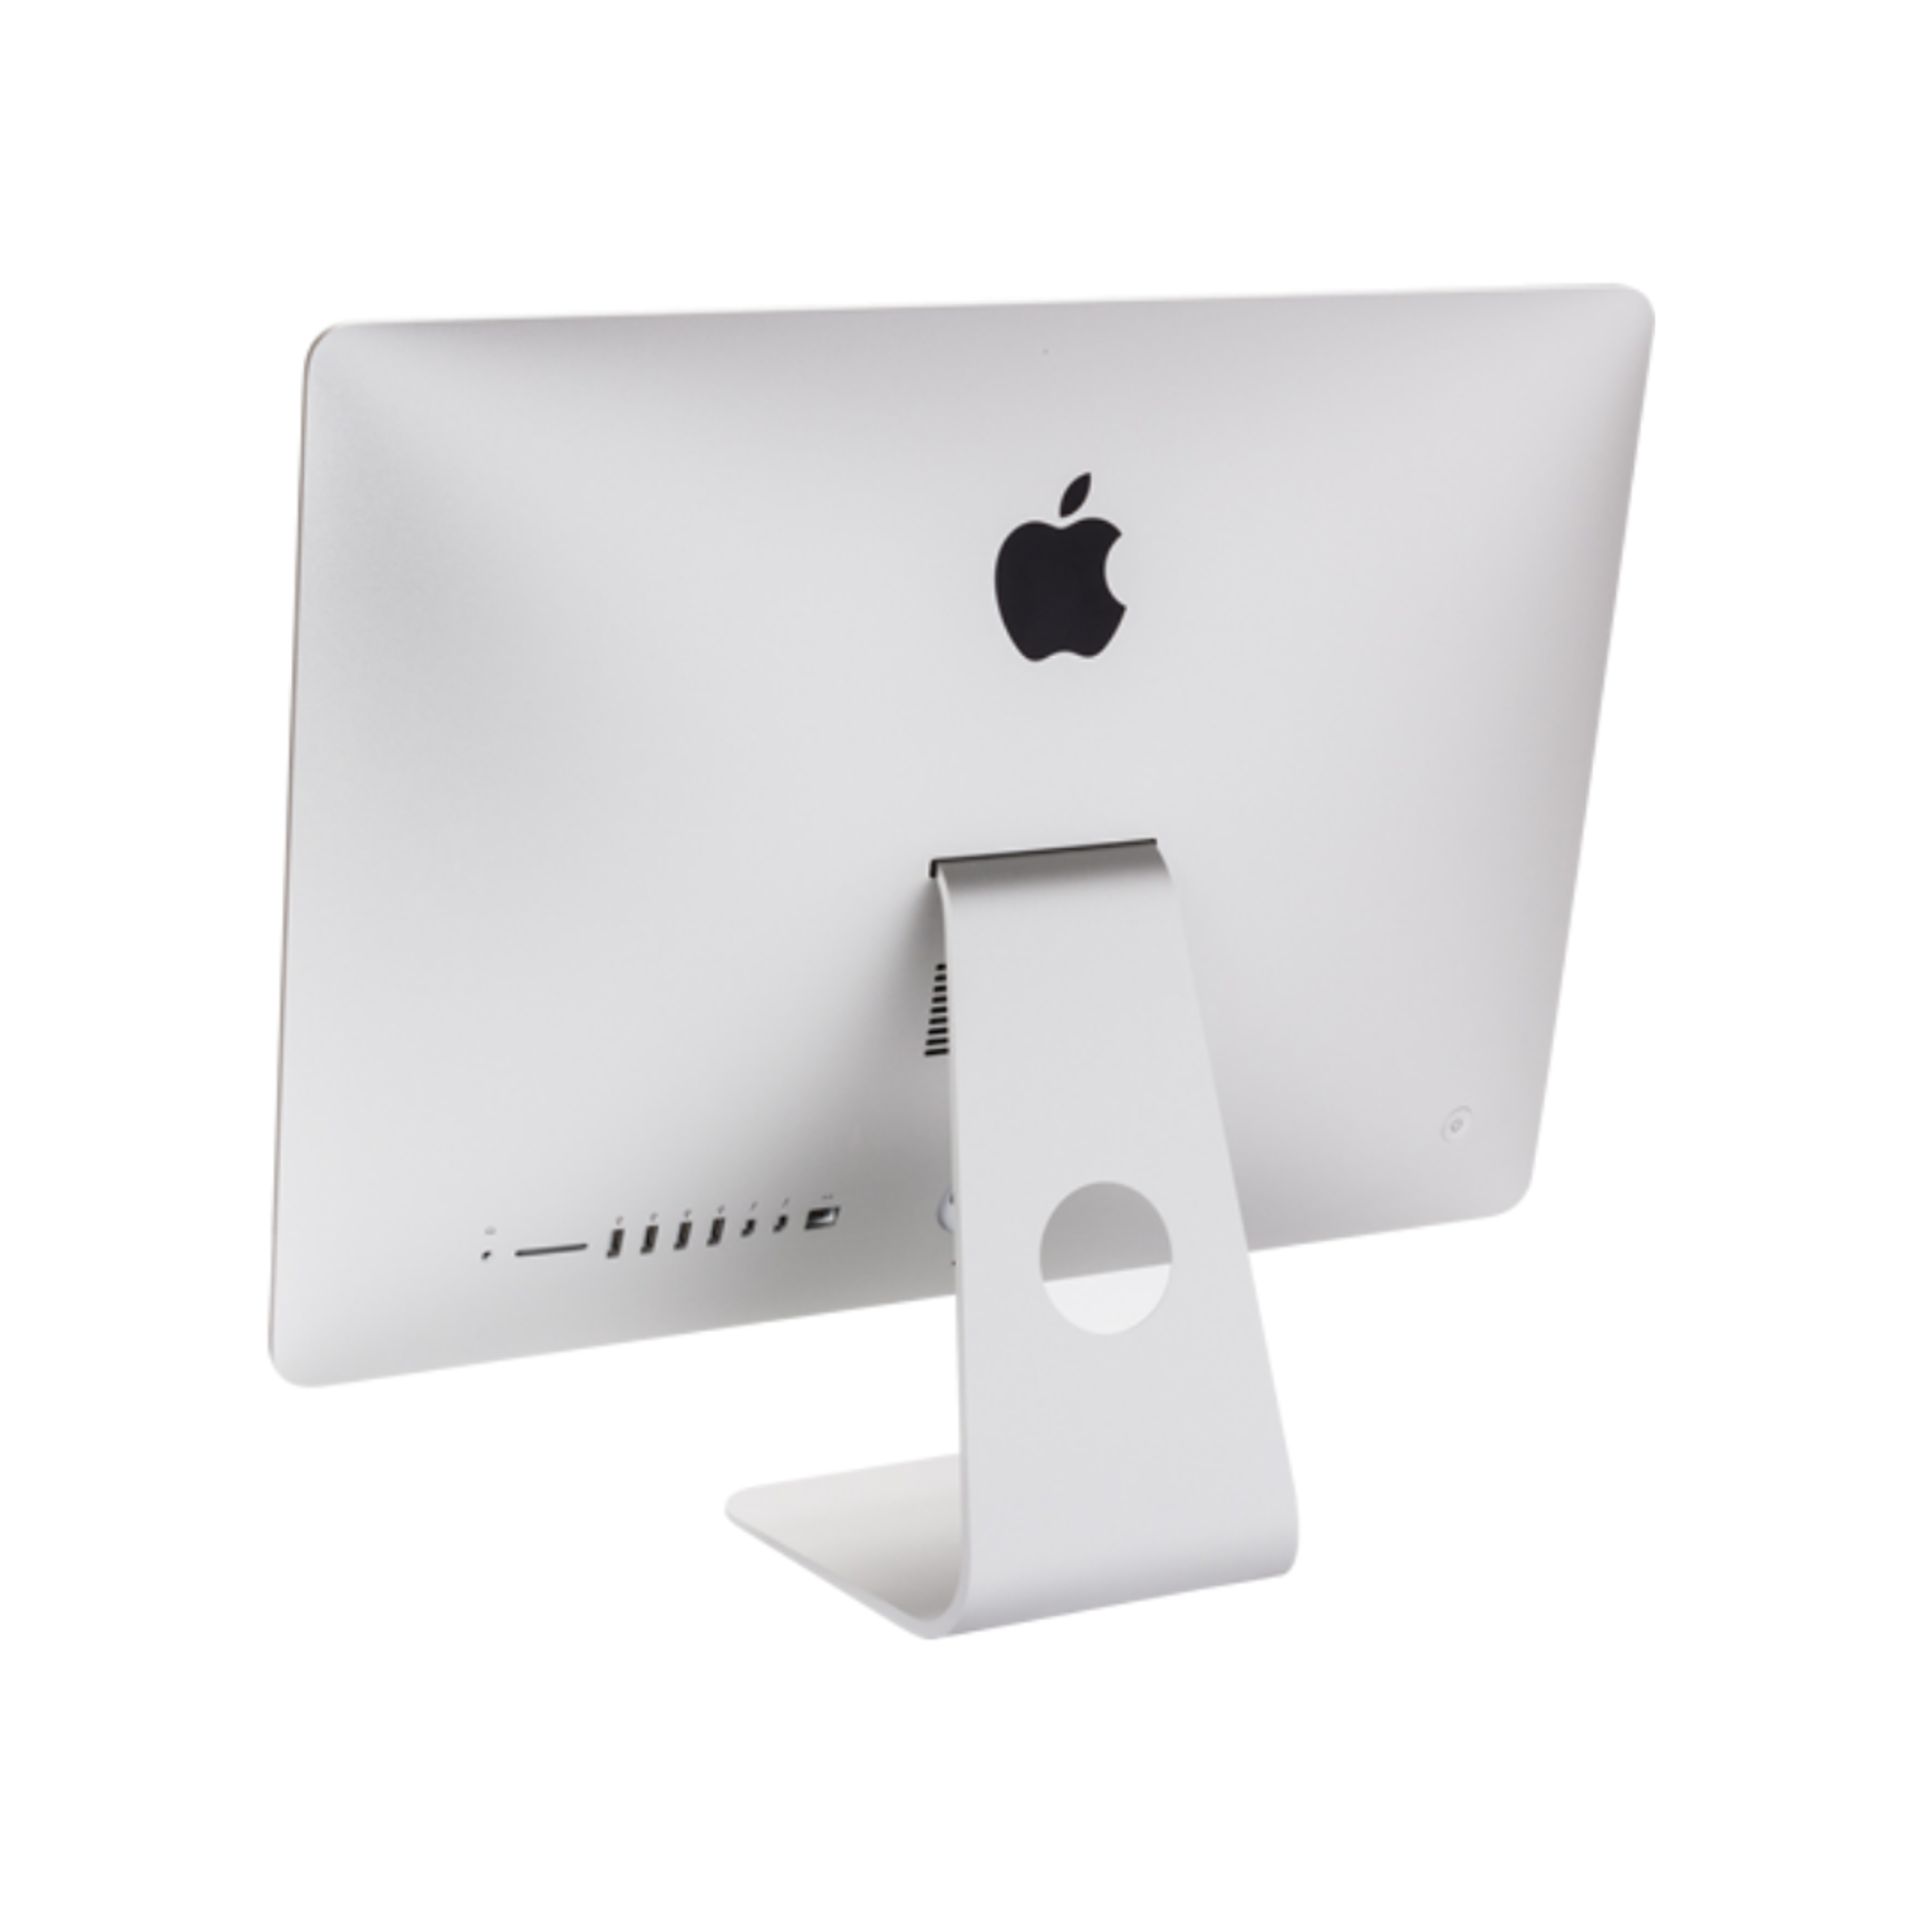 Apple iMac 21.5” A1418 (2013) OS x Catalina Intel Core i5 Quad Core 8GB Memory 1TB HD WiFi Office - Image 2 of 6